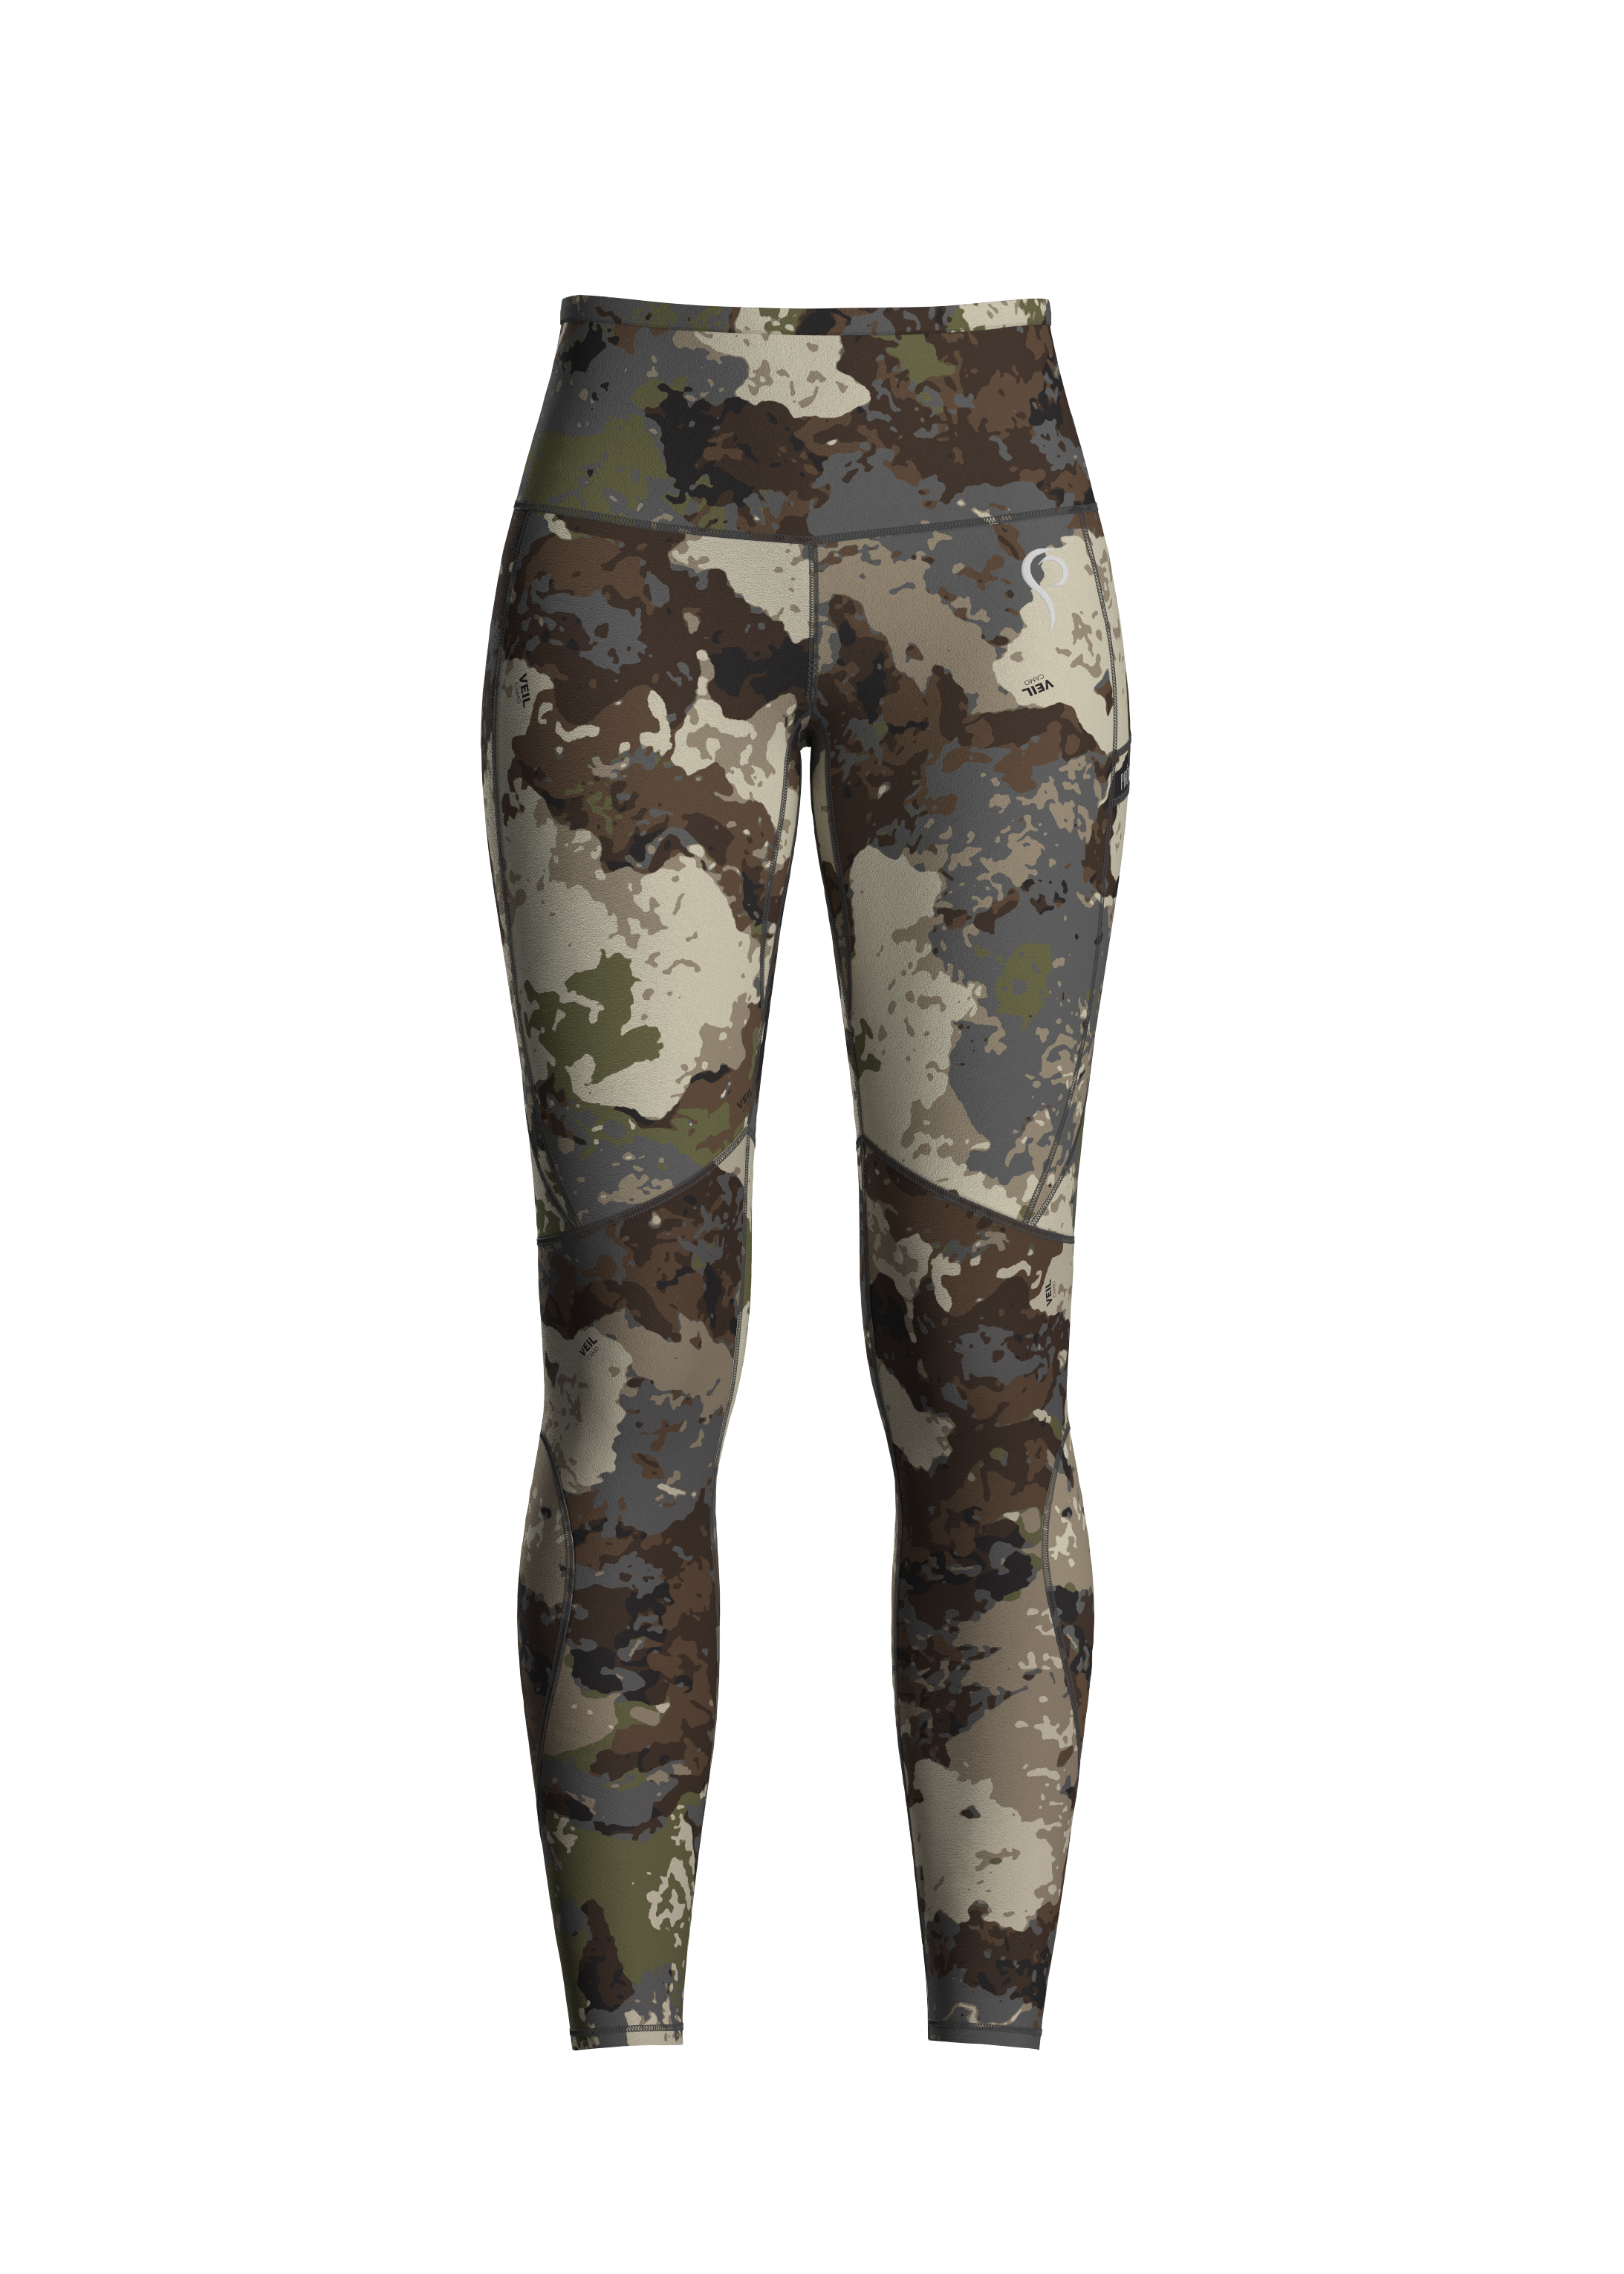 Beating Trousers Shooting Season Camouflage Leggings Brand New Size 12 |  eBay